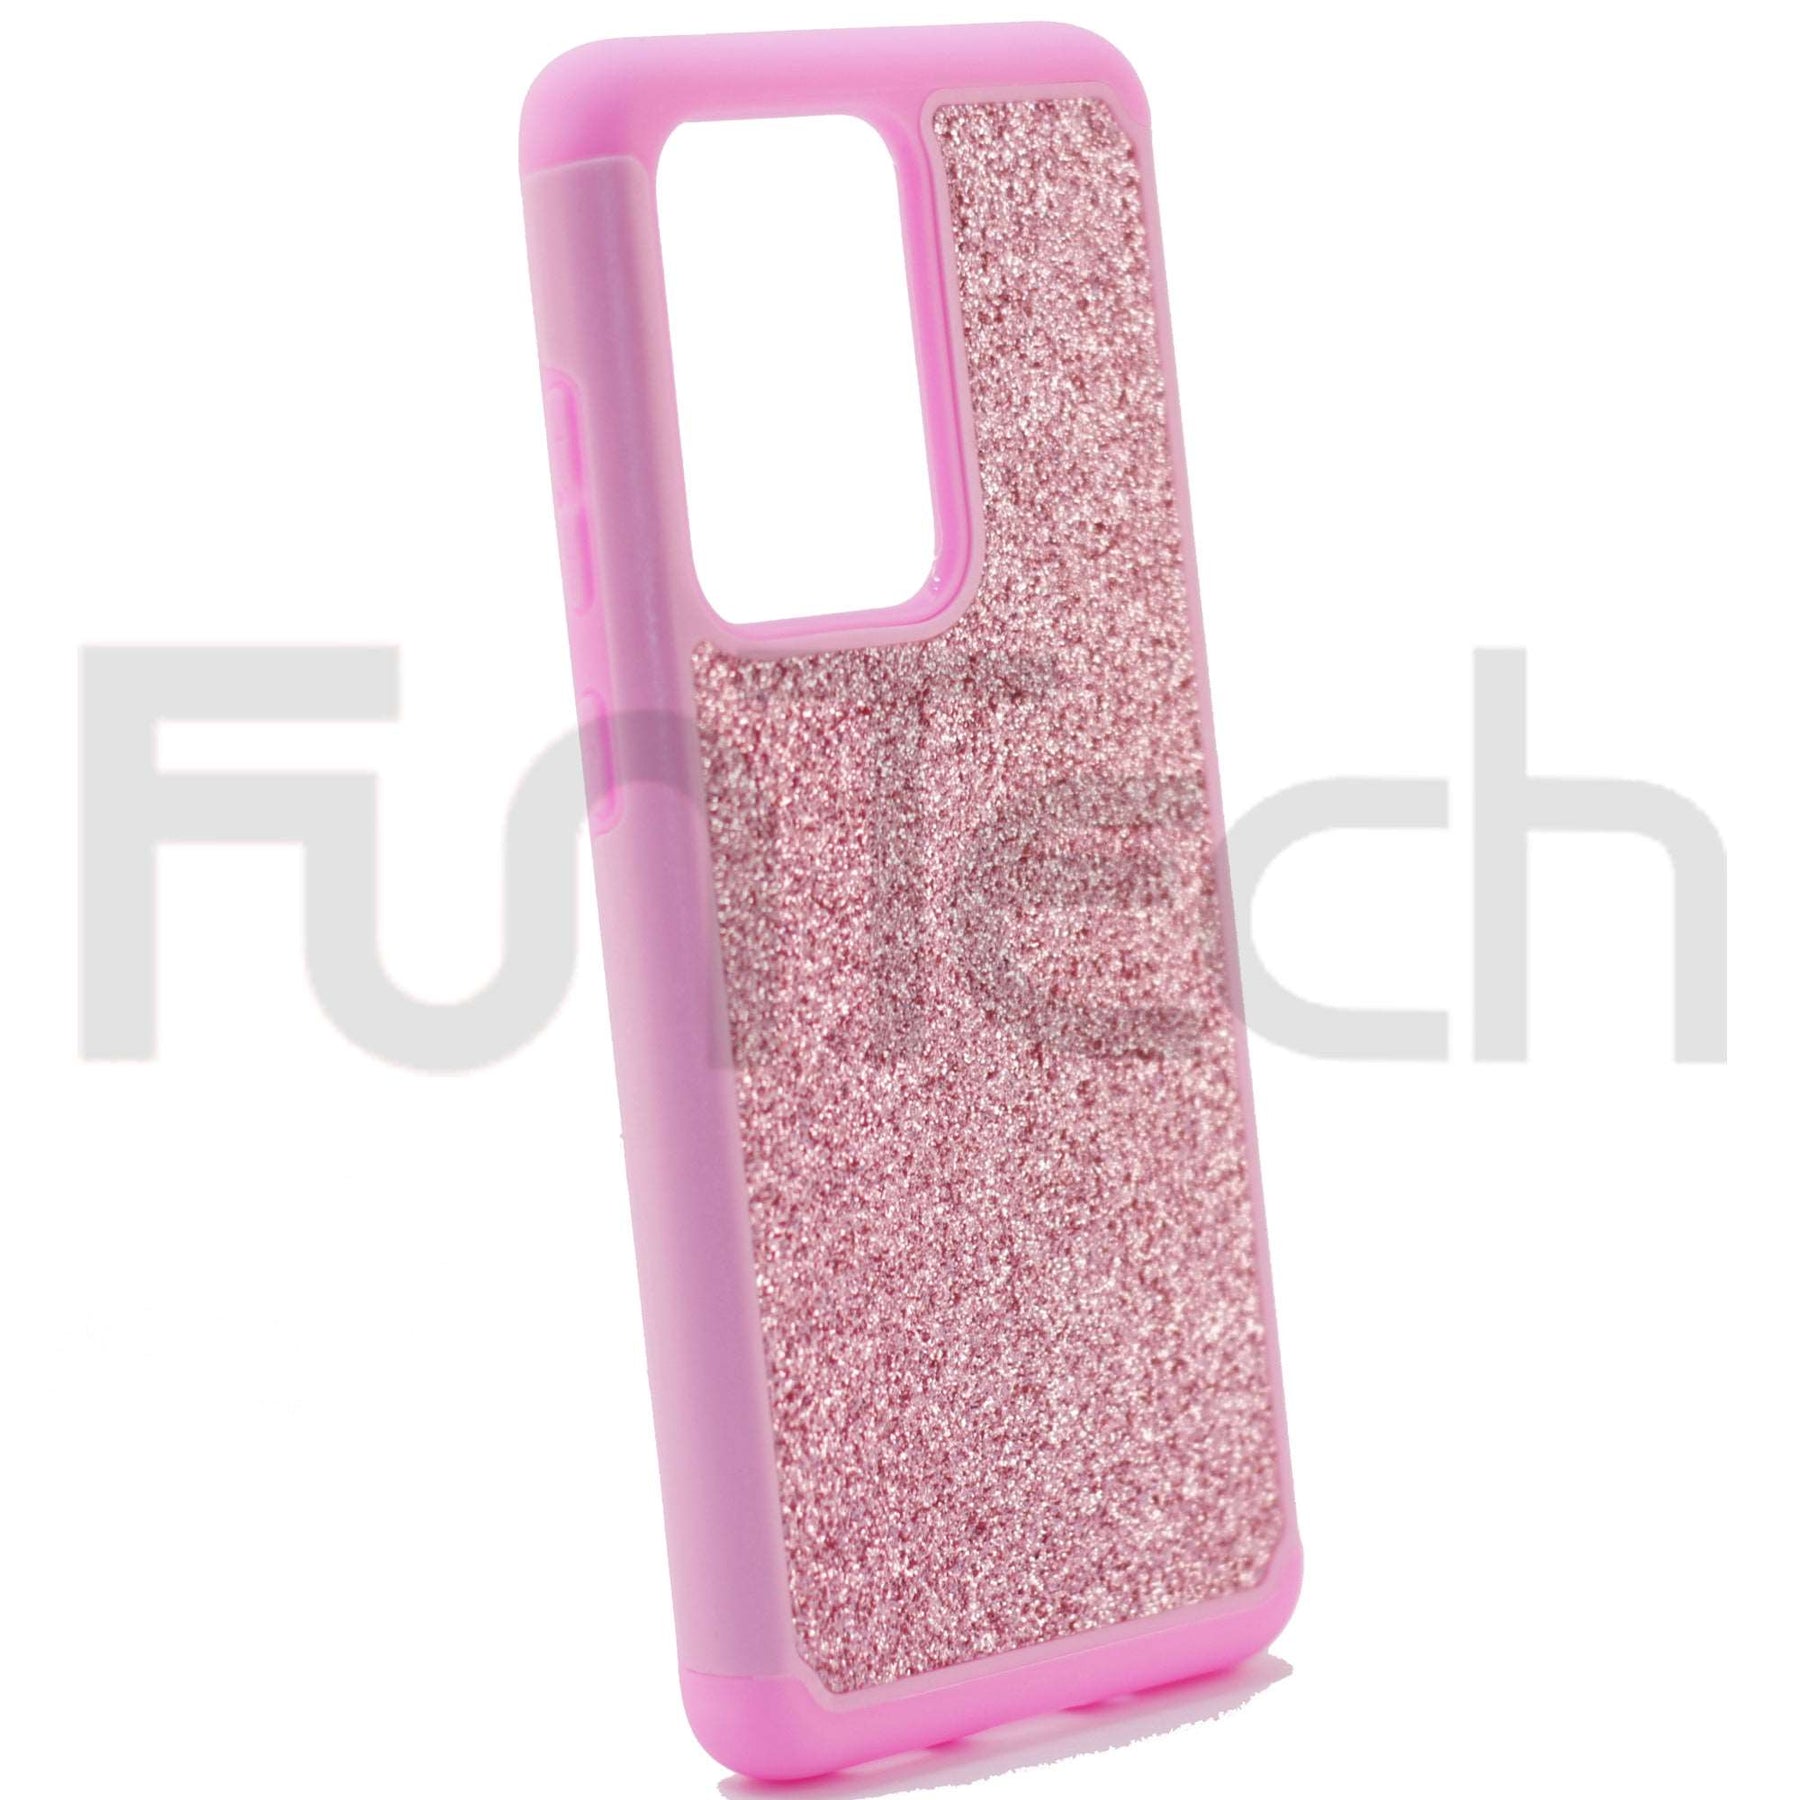 Samsung S20 Ultra Shockproof pink glitter phone case